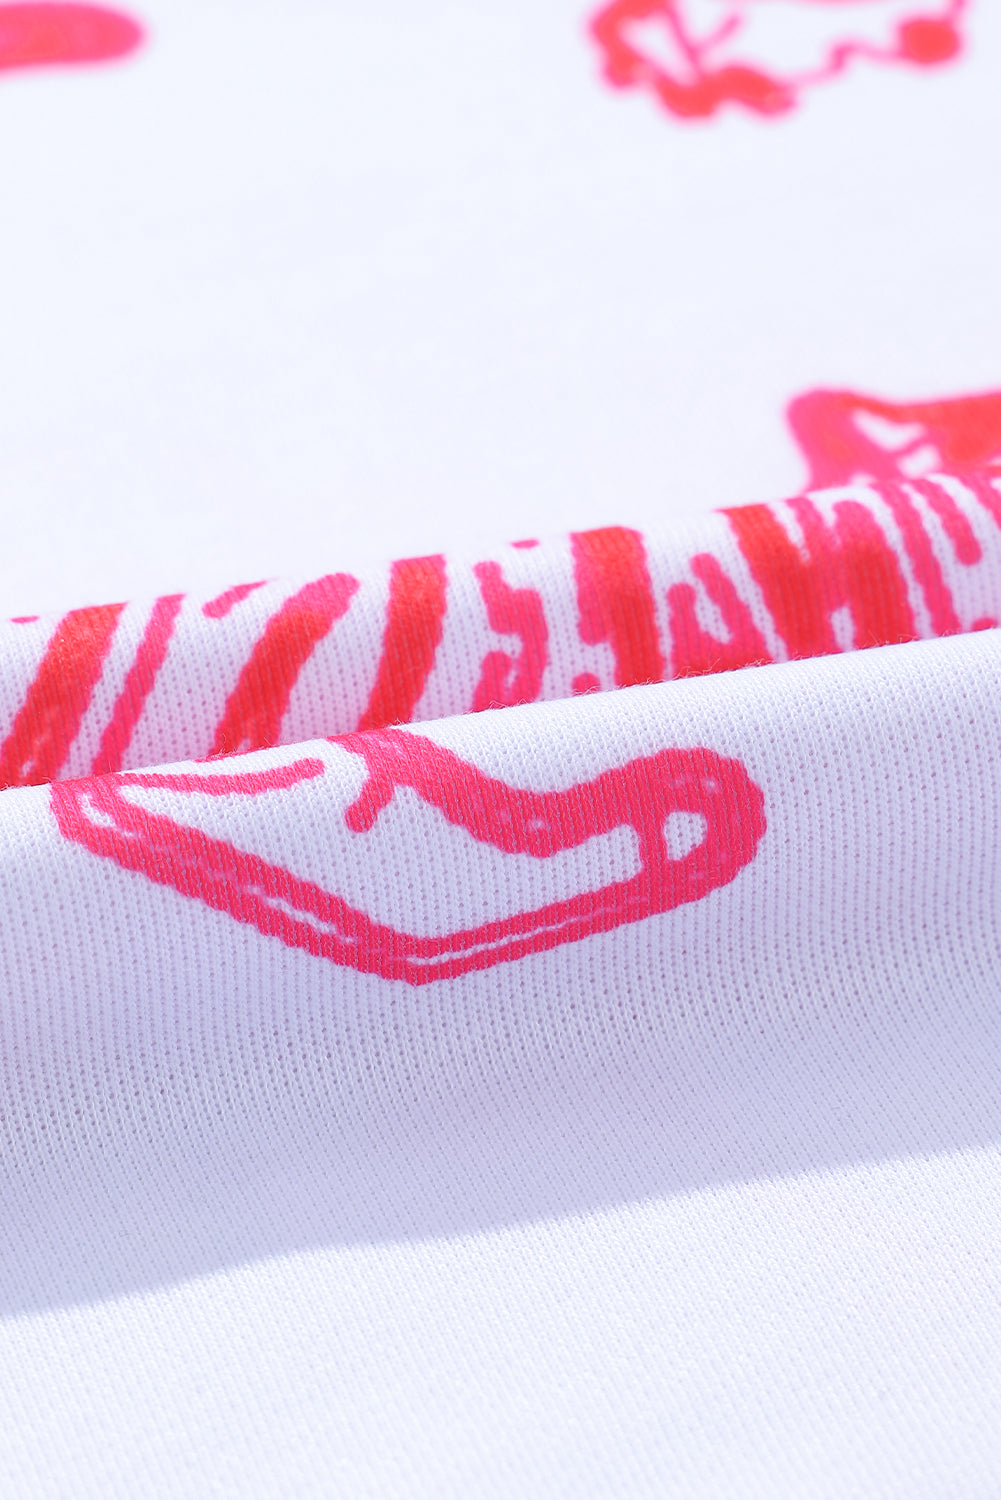 Sweat-shirt à imprimé animal rose blanc vif